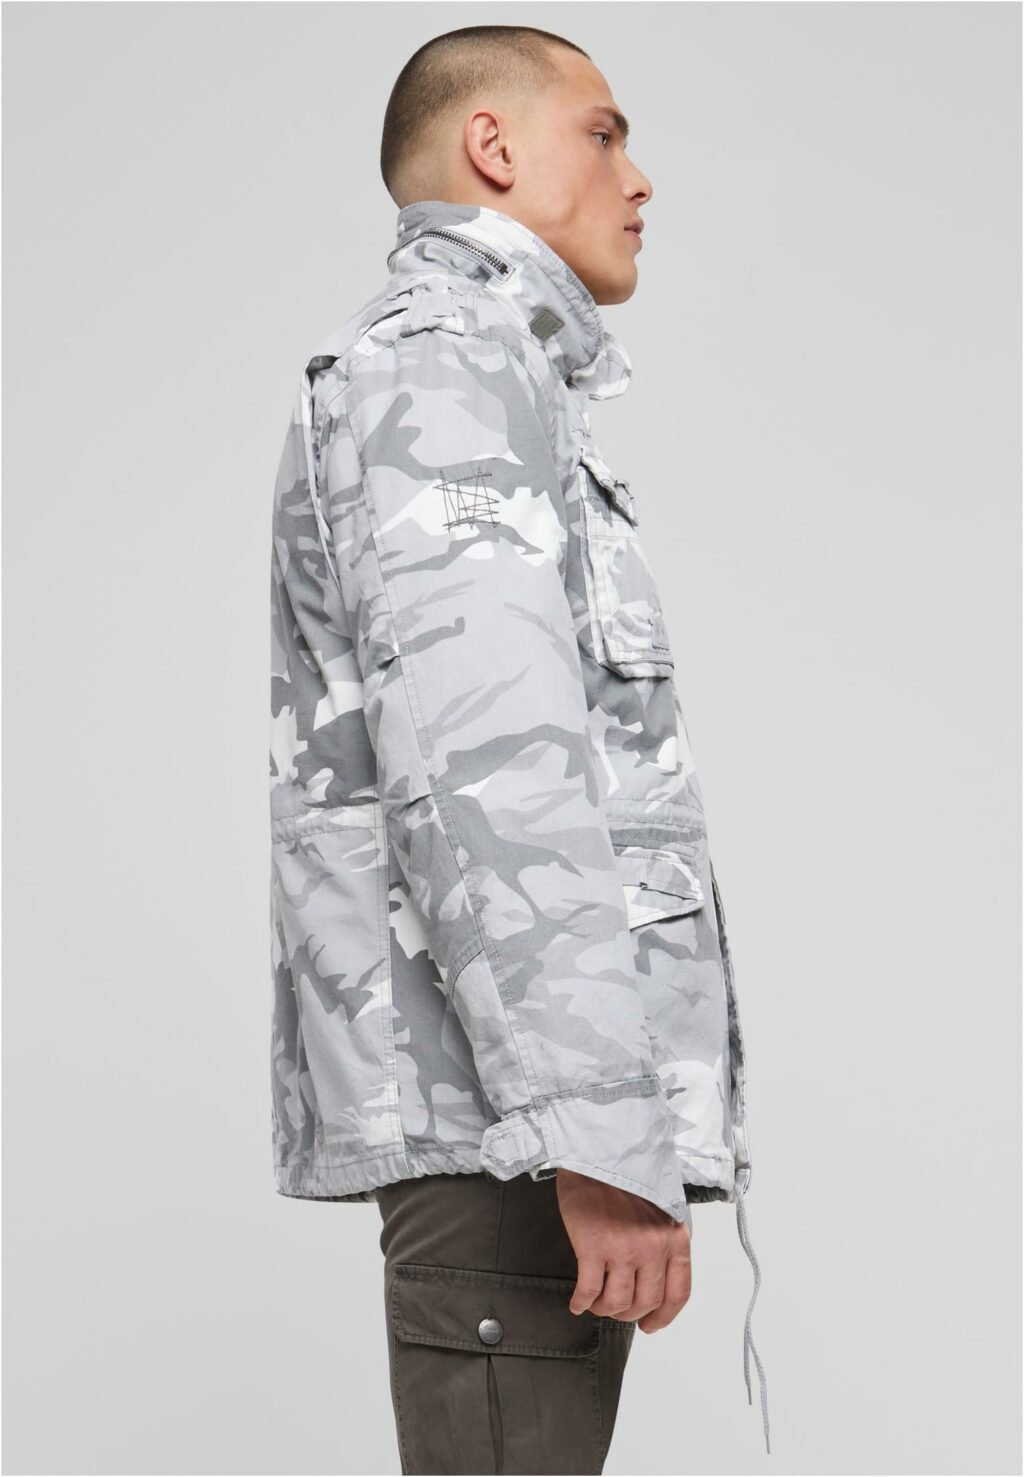 Brandit M-65 Giant Jacket blizzard camo BD3101